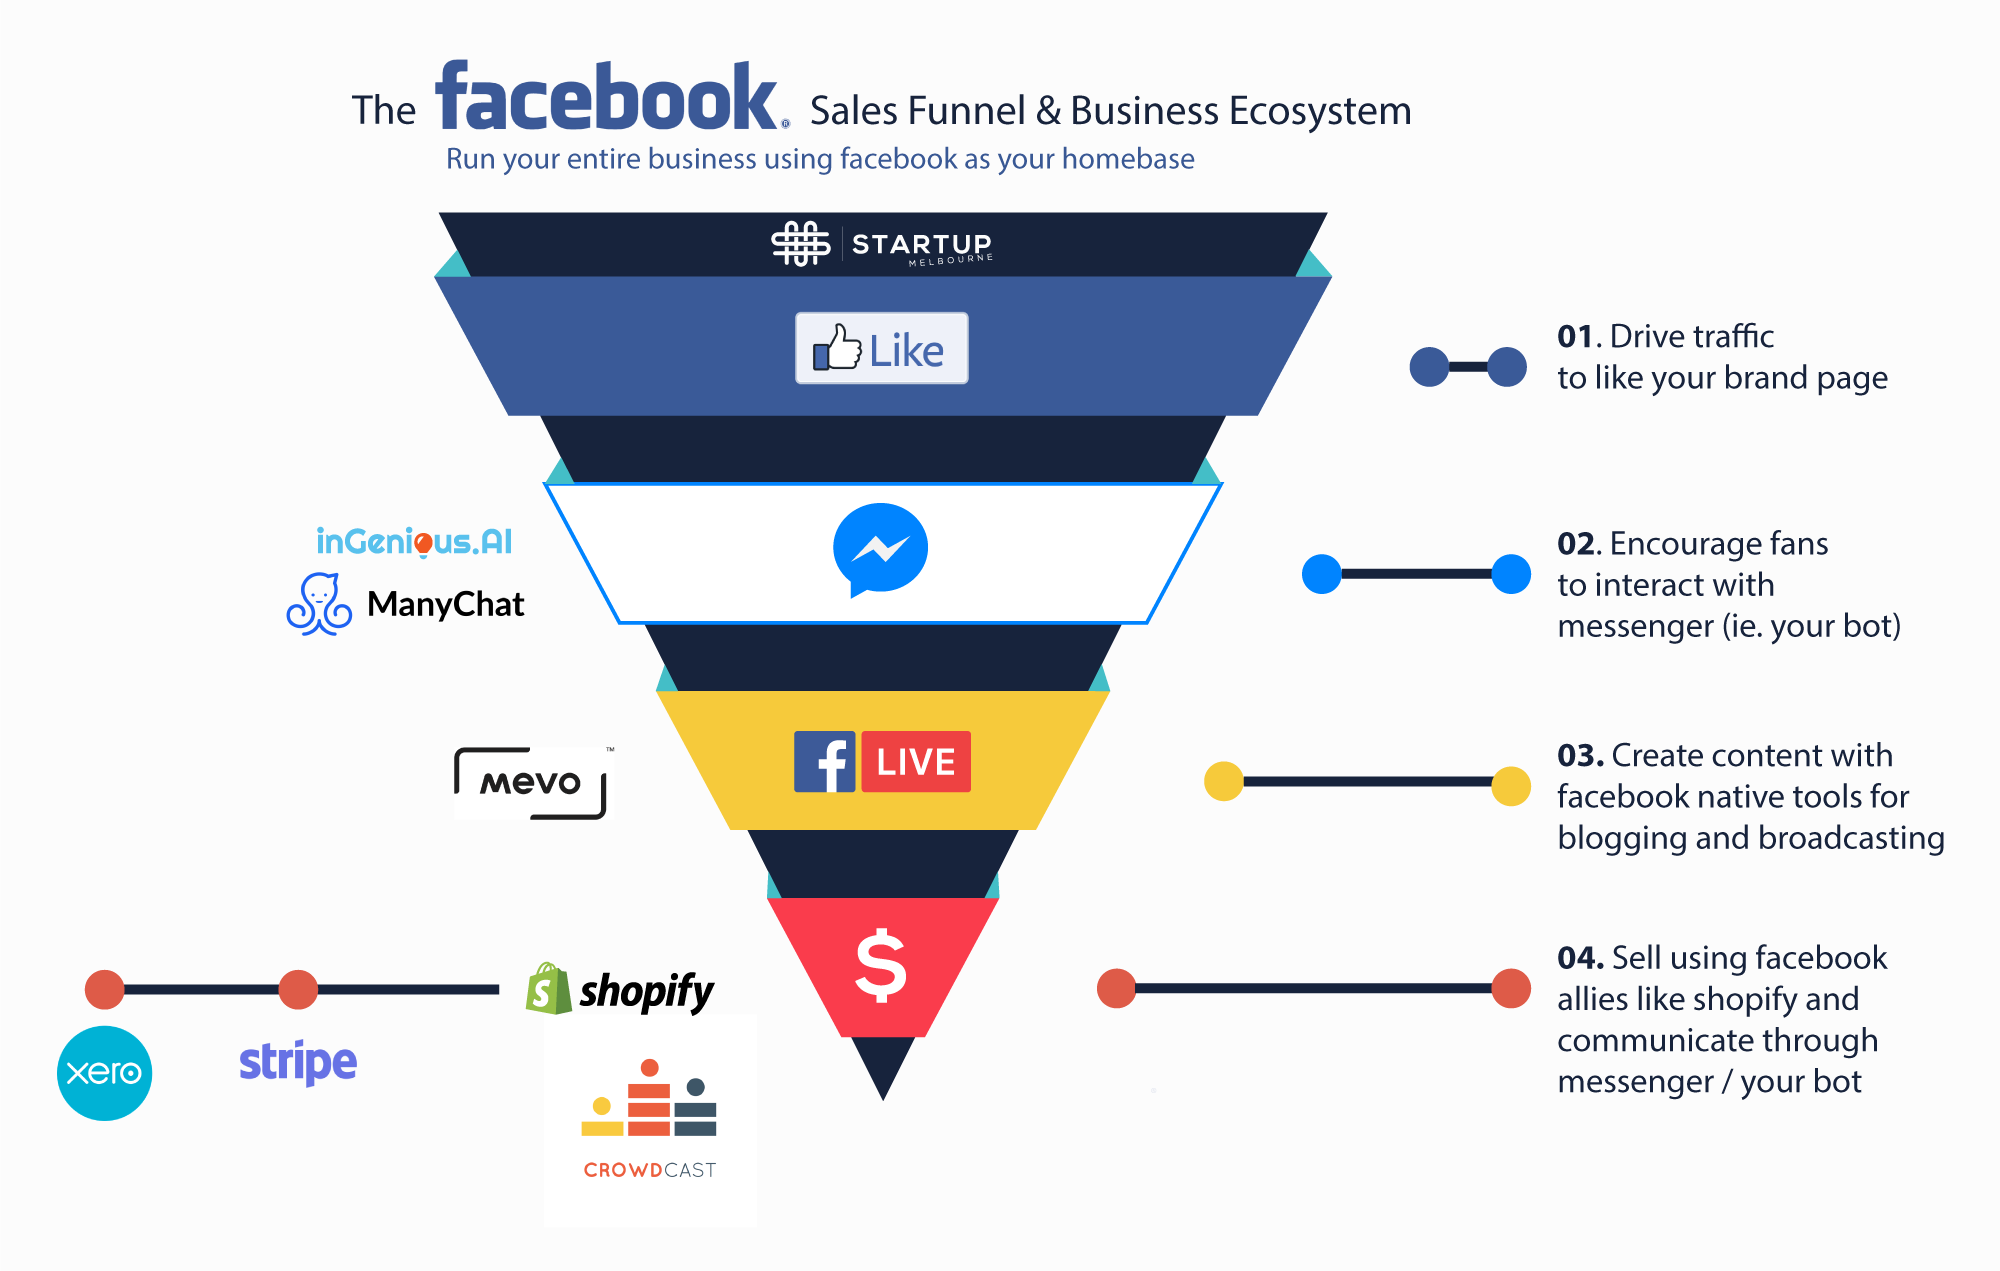 Facebook as a business ecosystem